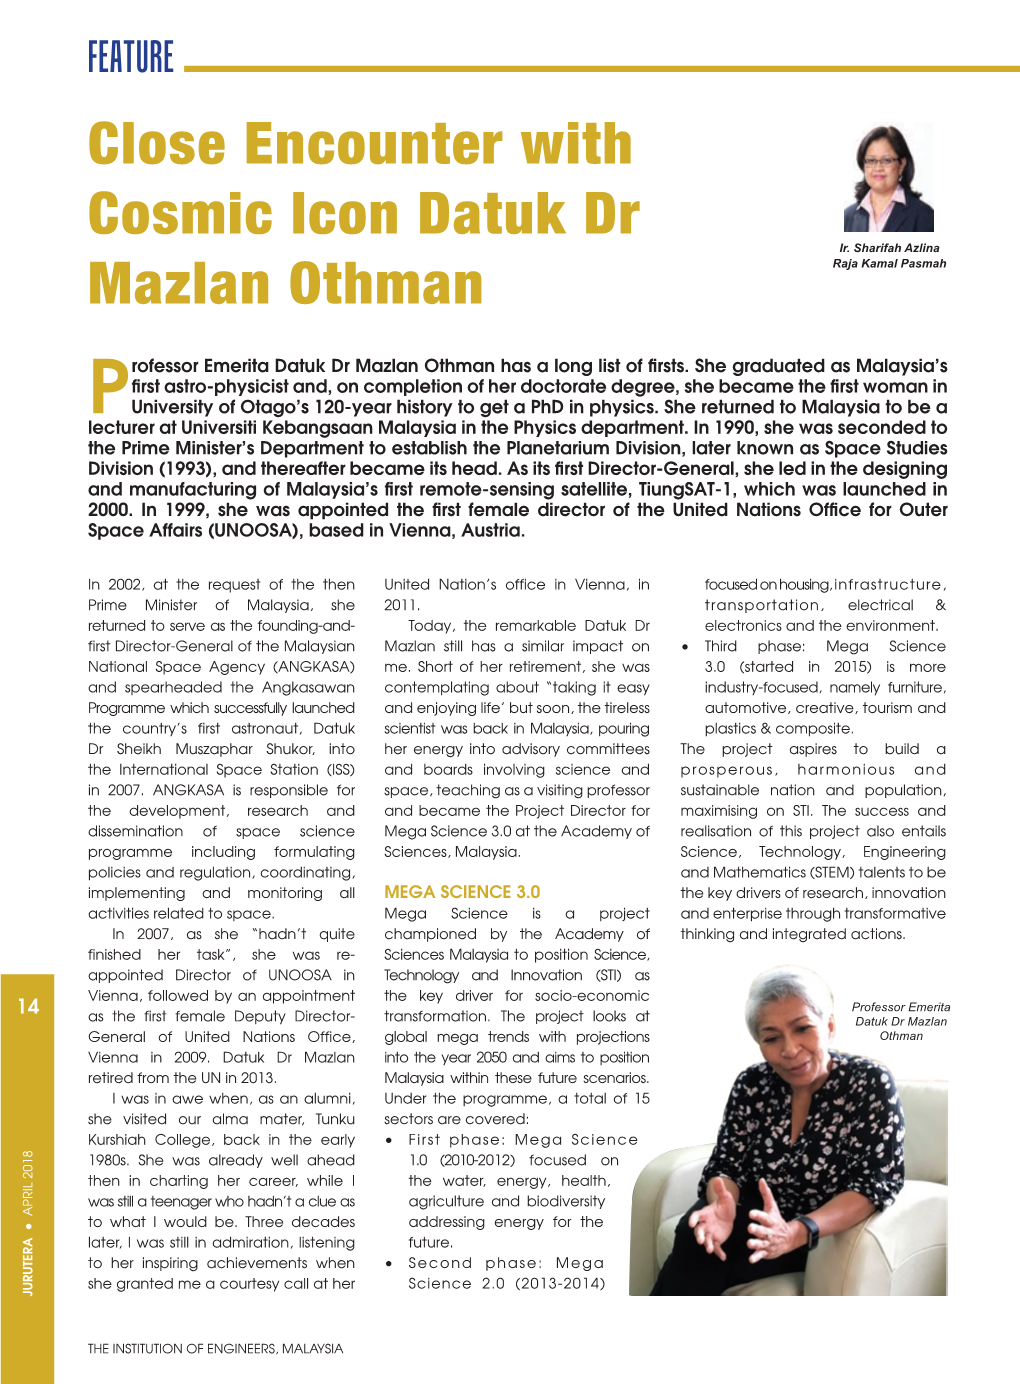 Close Encounter with Cosmic Icon Datuk Dr Mazlan Othman